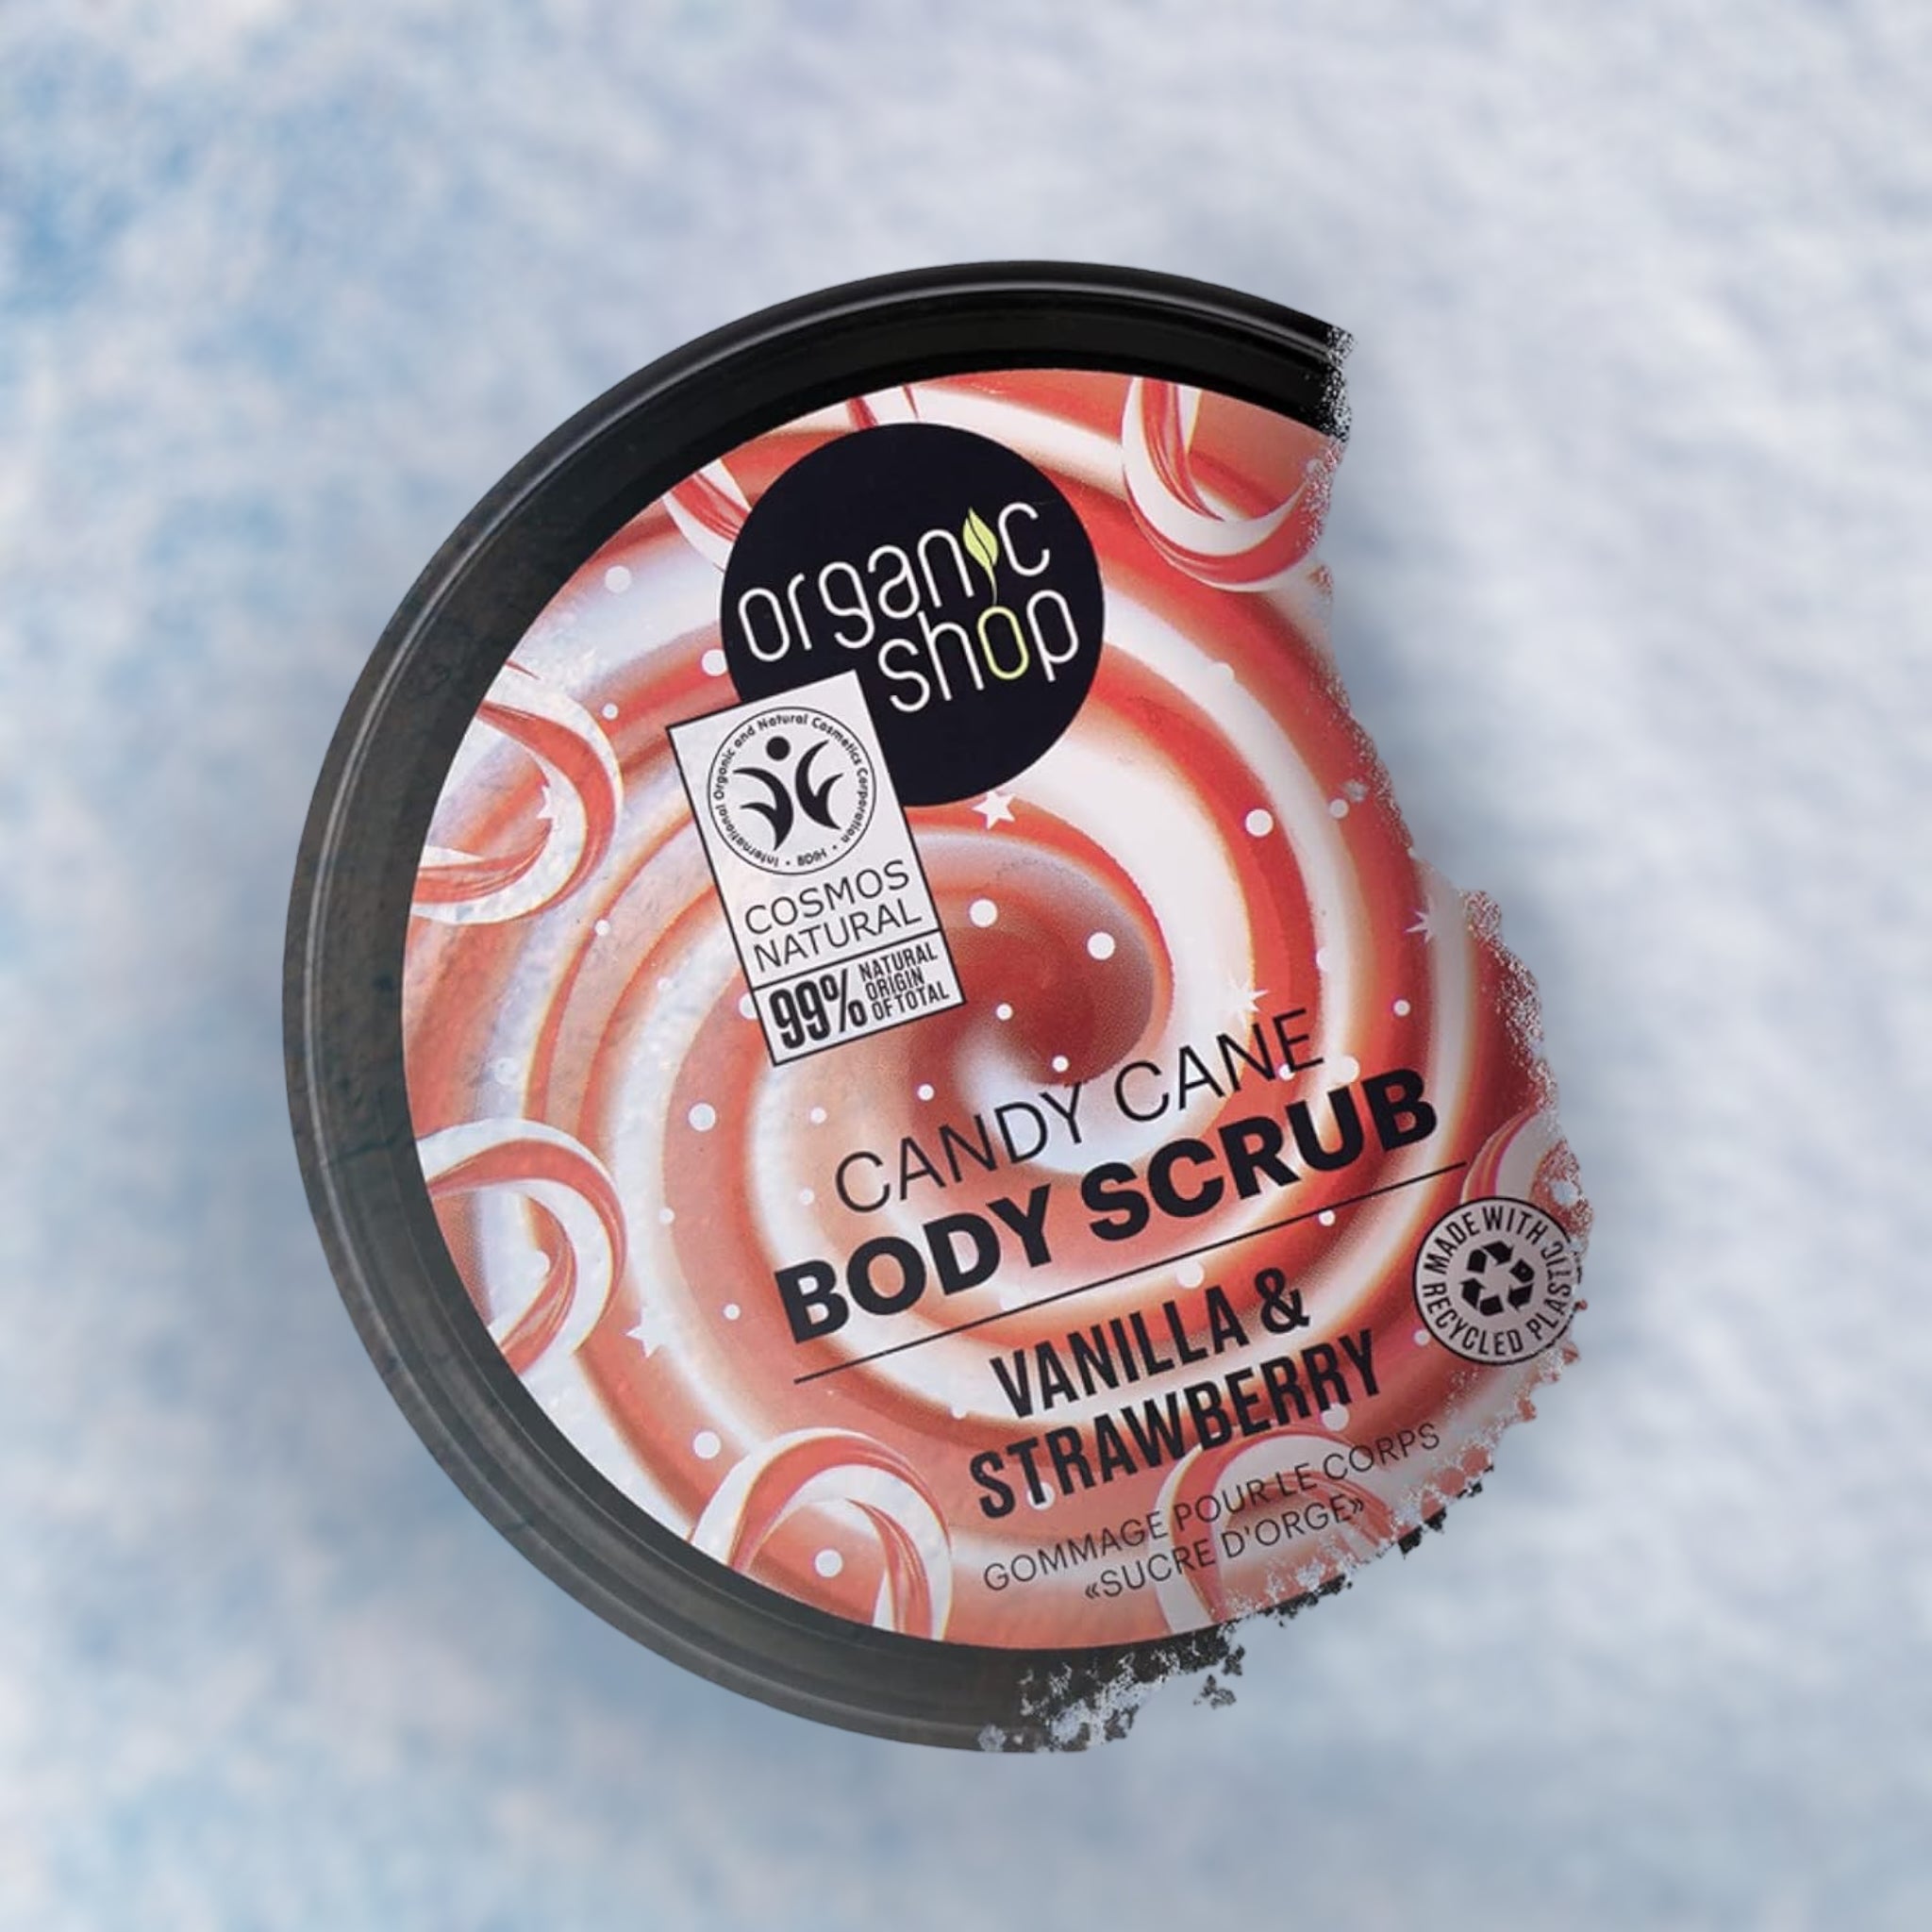 ***BACK SOON***Vanilla & Strawberry Candy Cane Body Scrub - mypure.co.uk